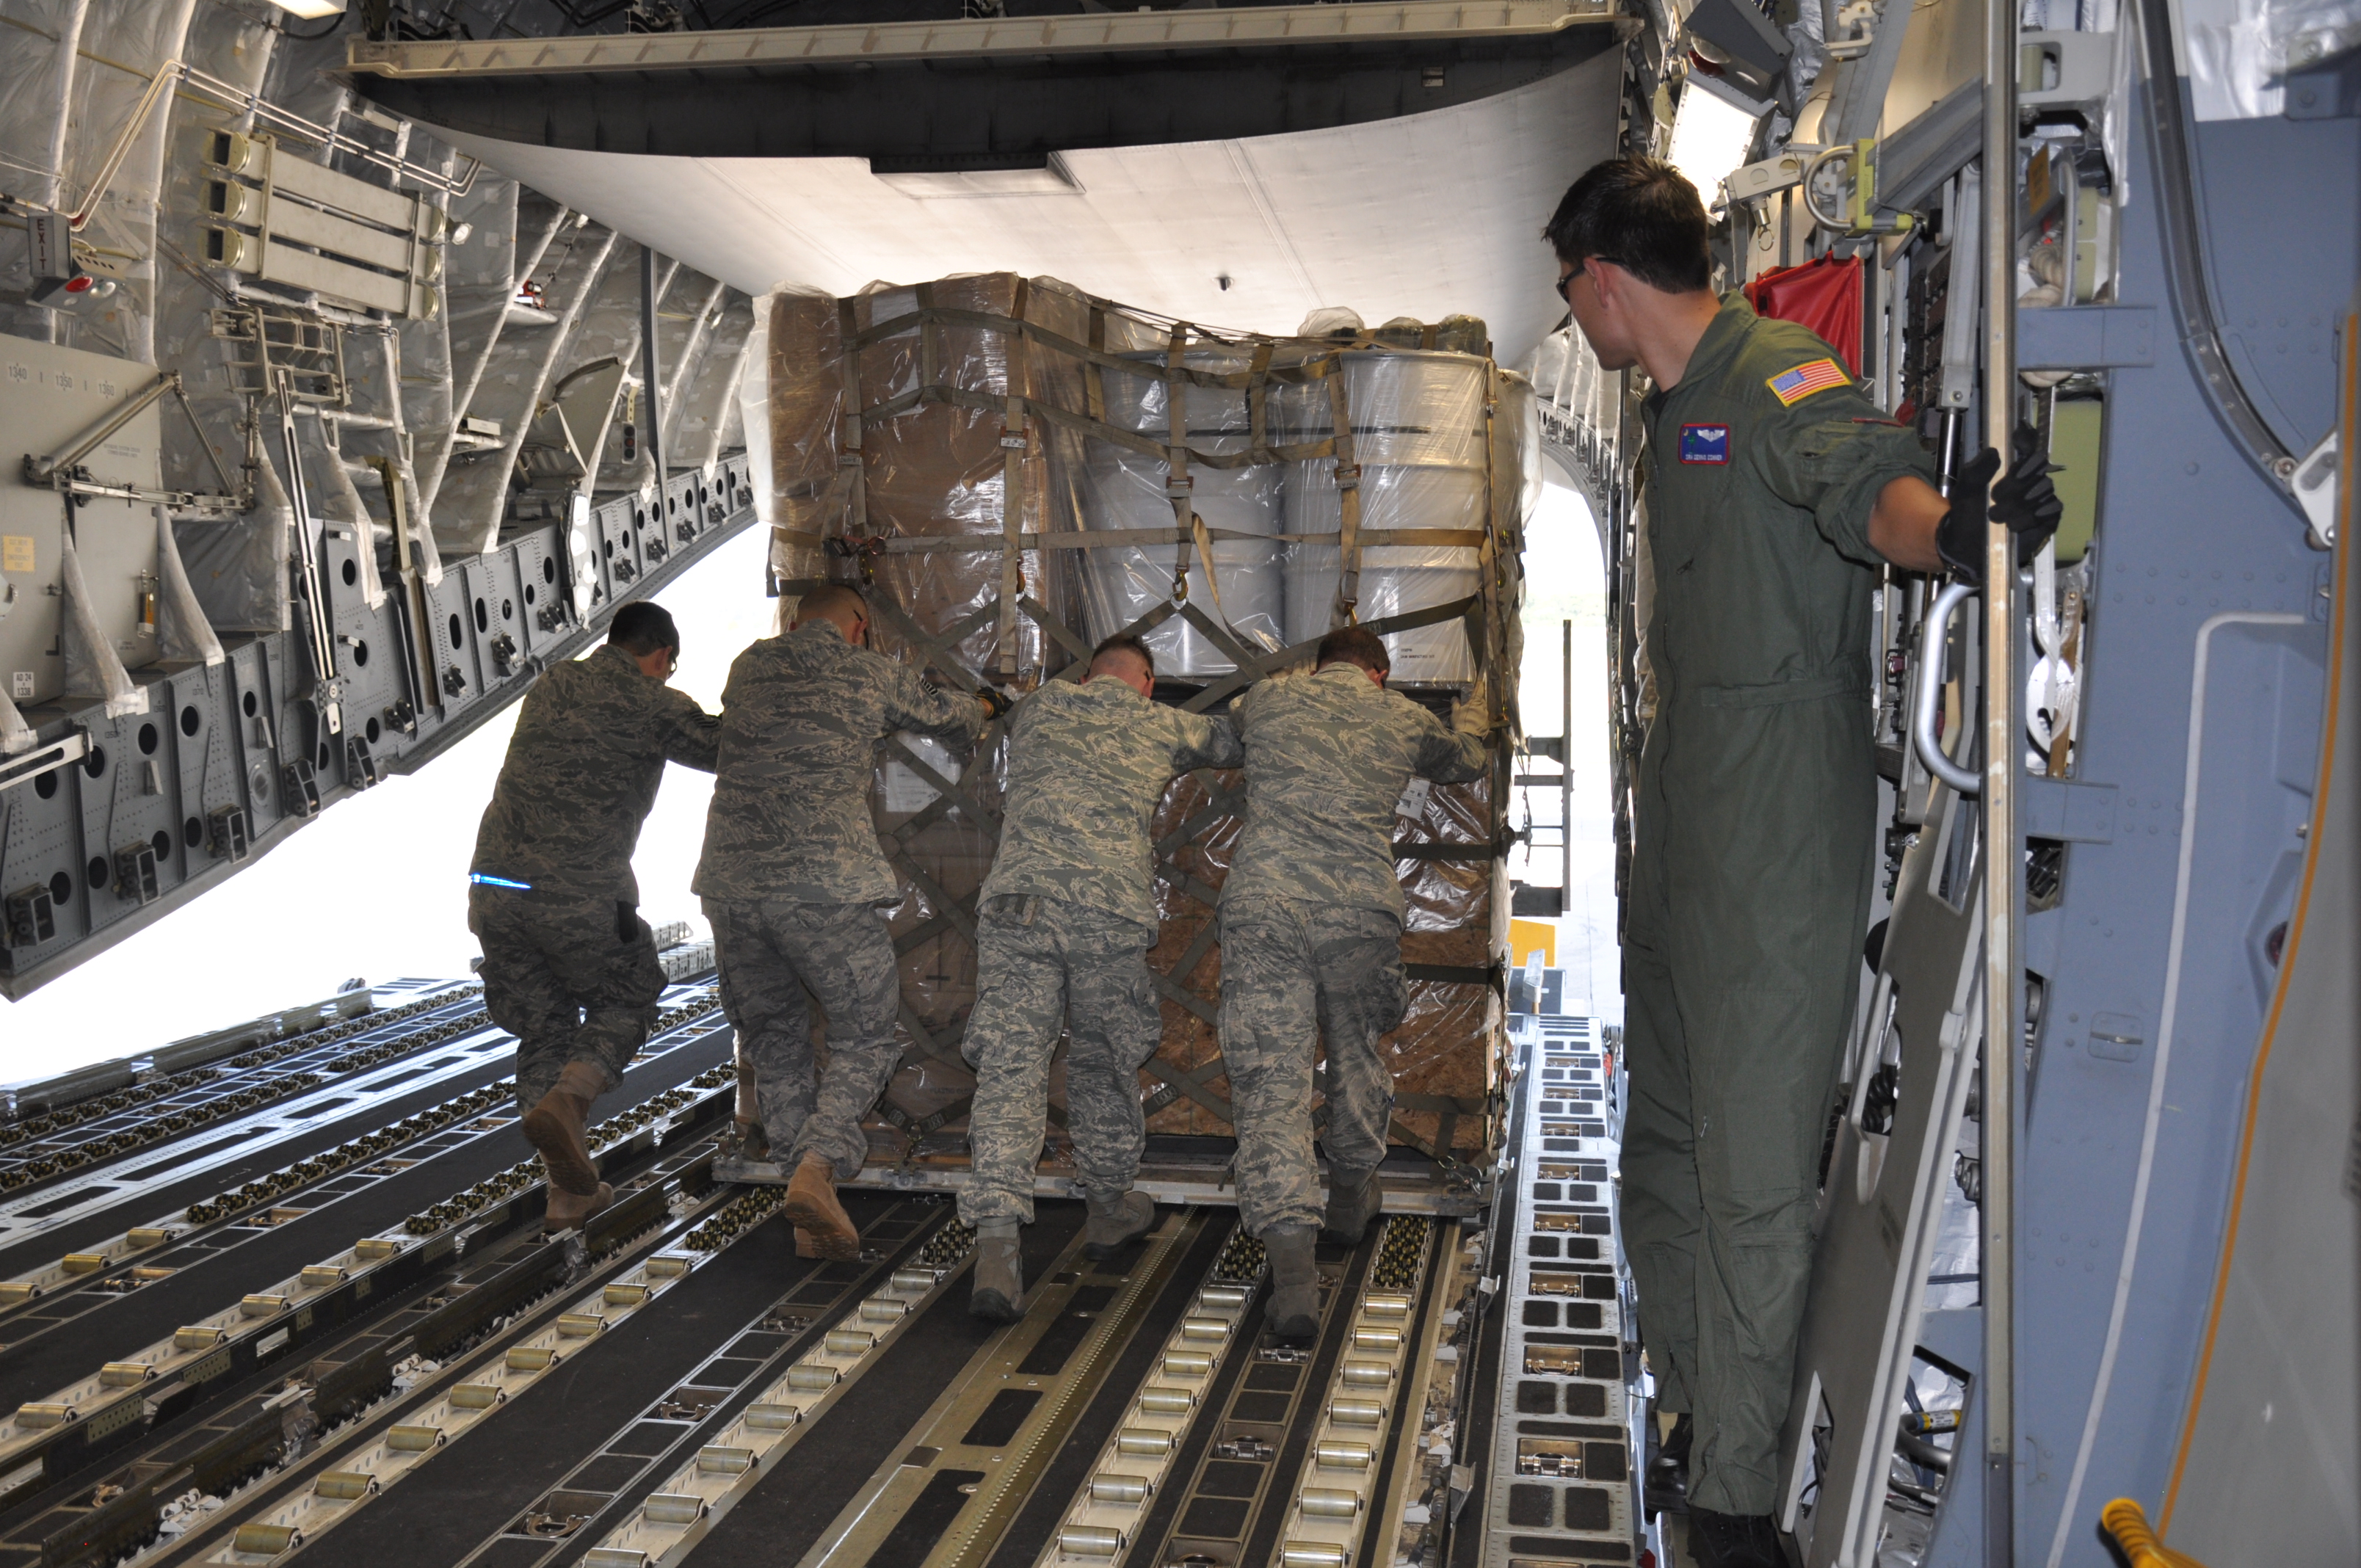 air force humanitarian assignment process